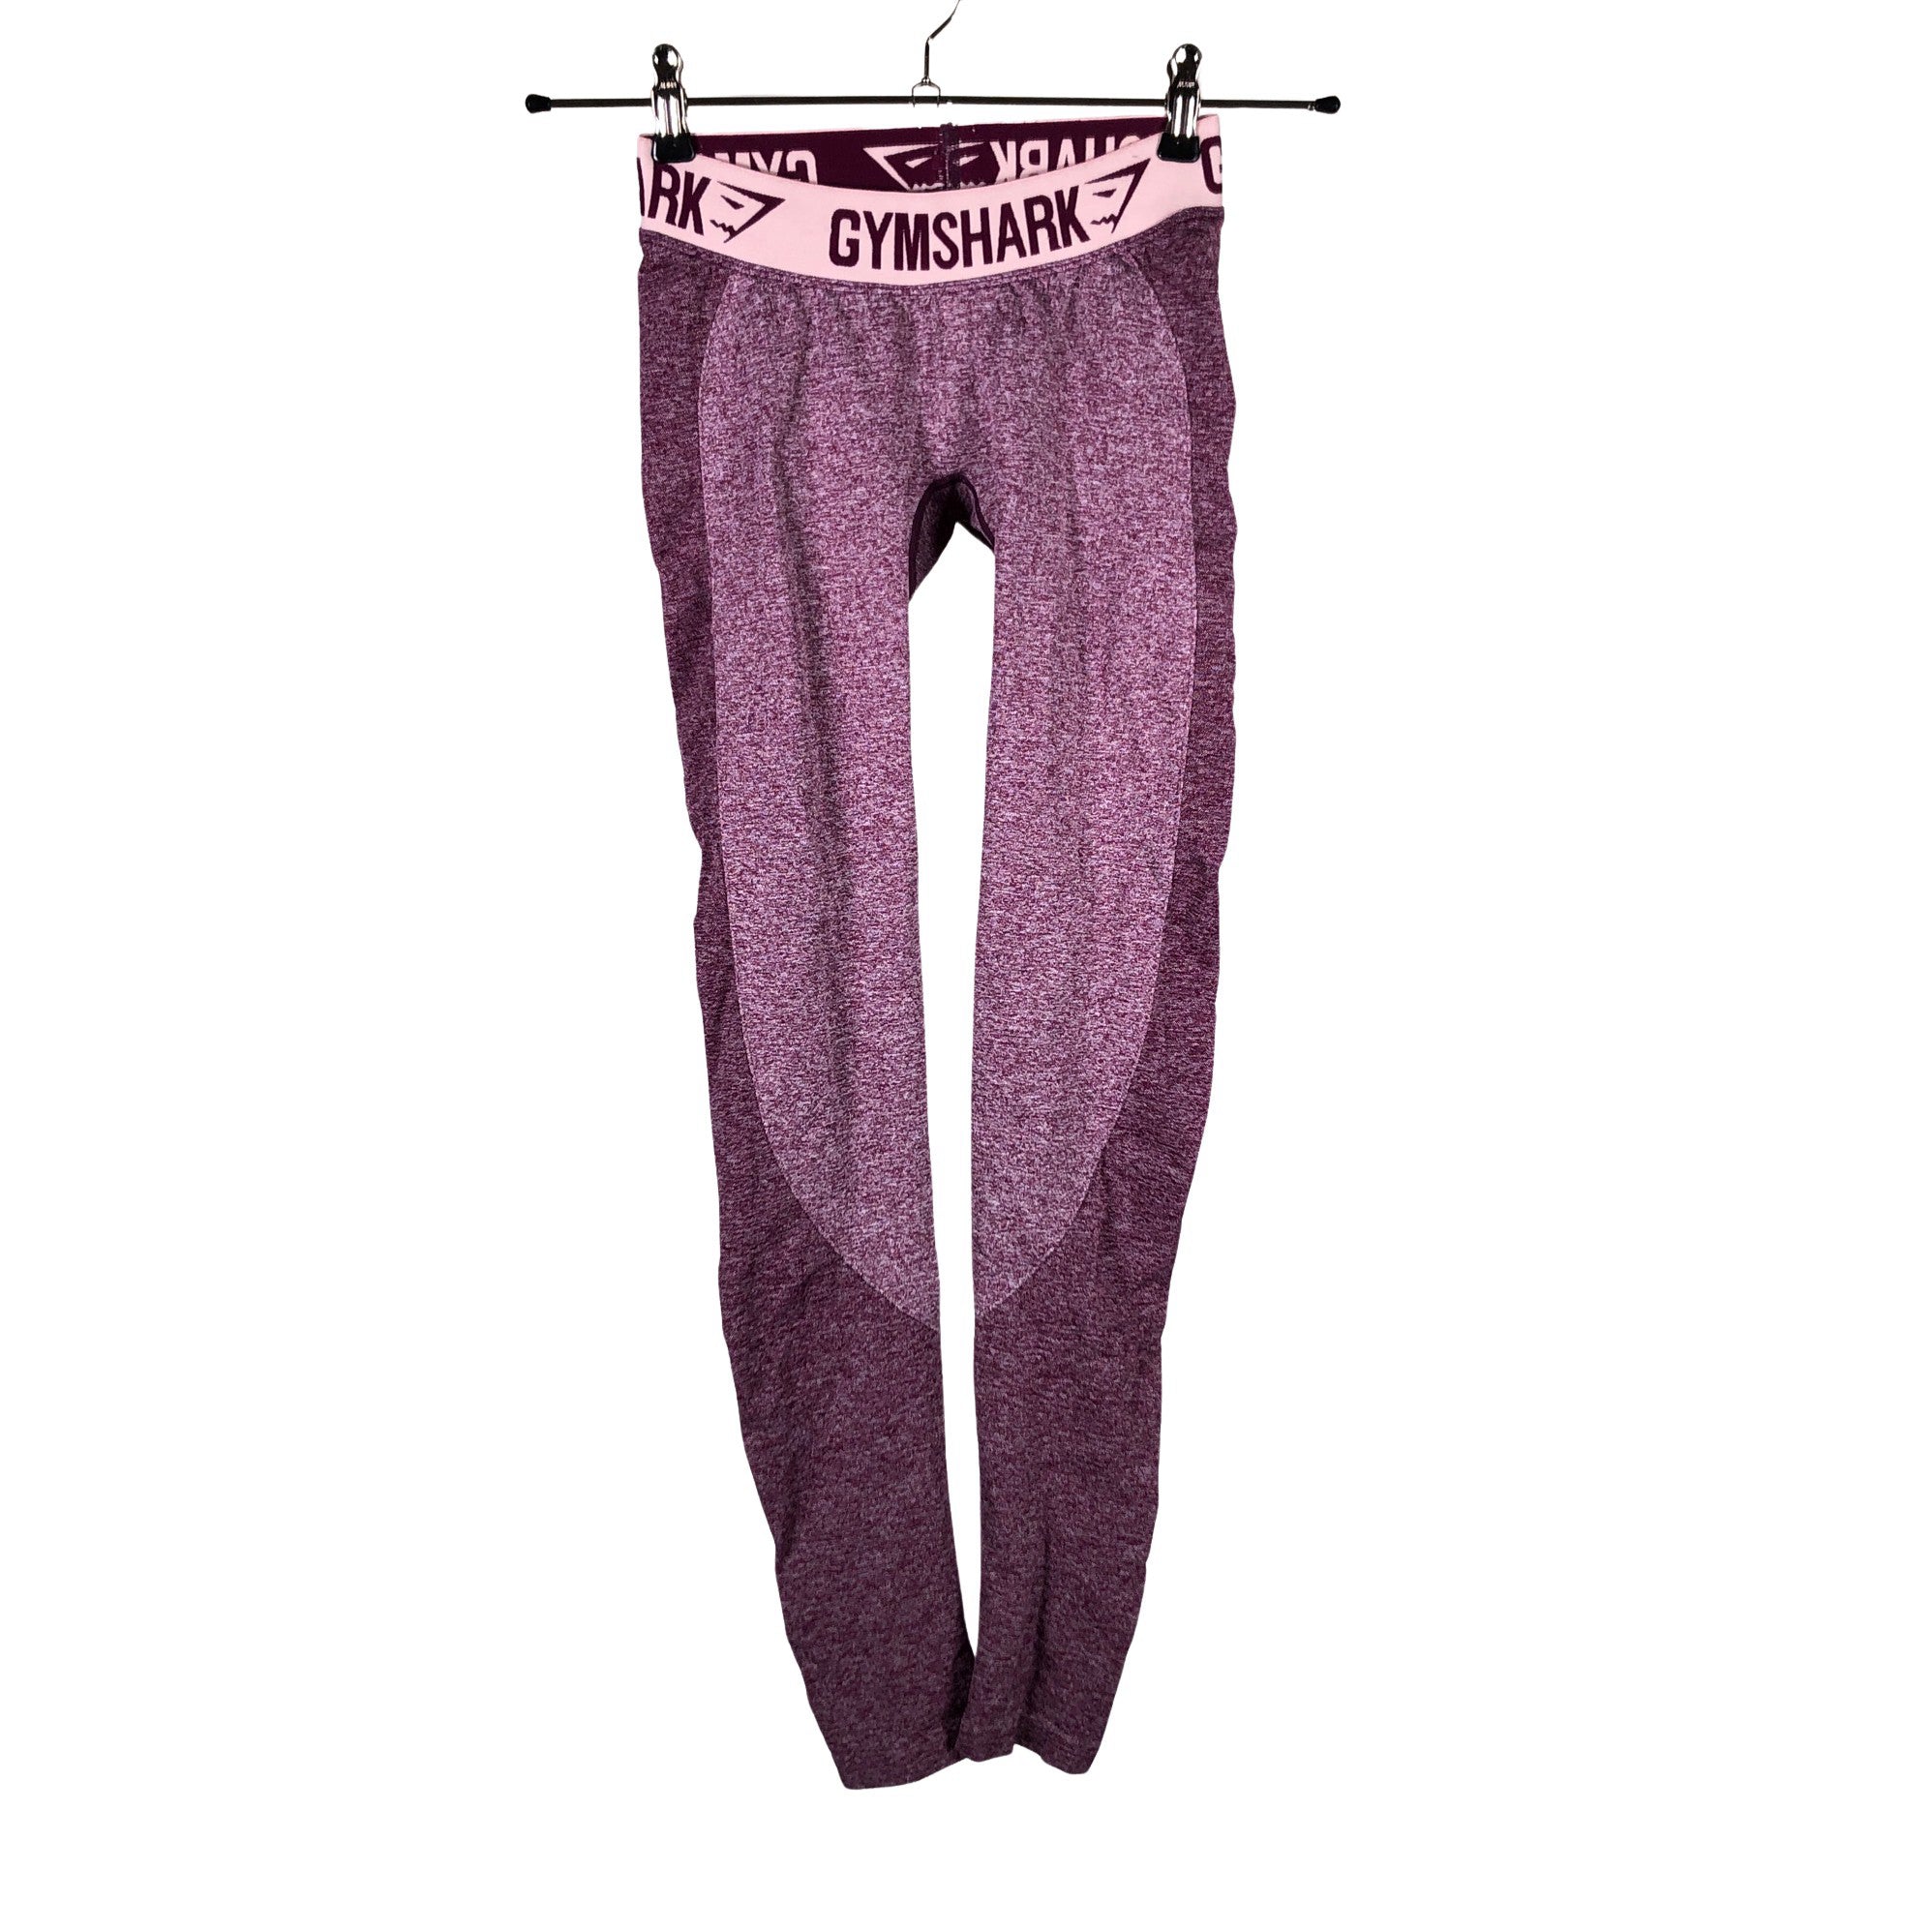 Women's Gymshark Sports tights, size 34 (Purple)